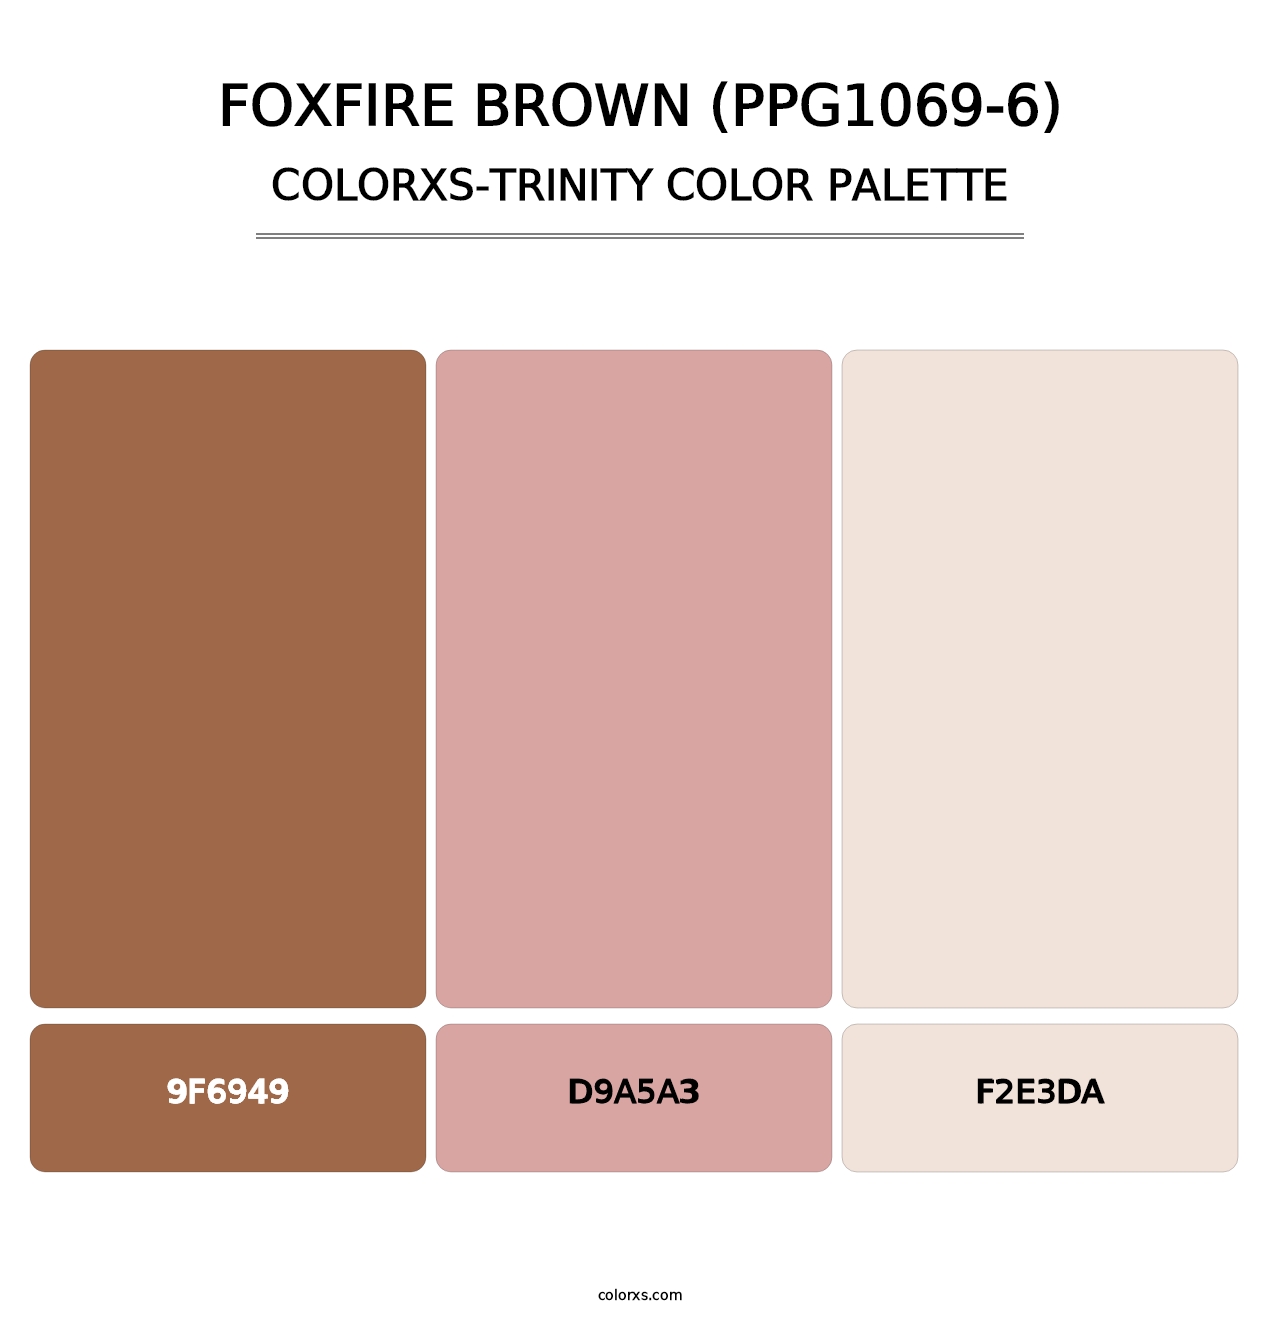 Foxfire Brown (PPG1069-6) - Colorxs Trinity Palette